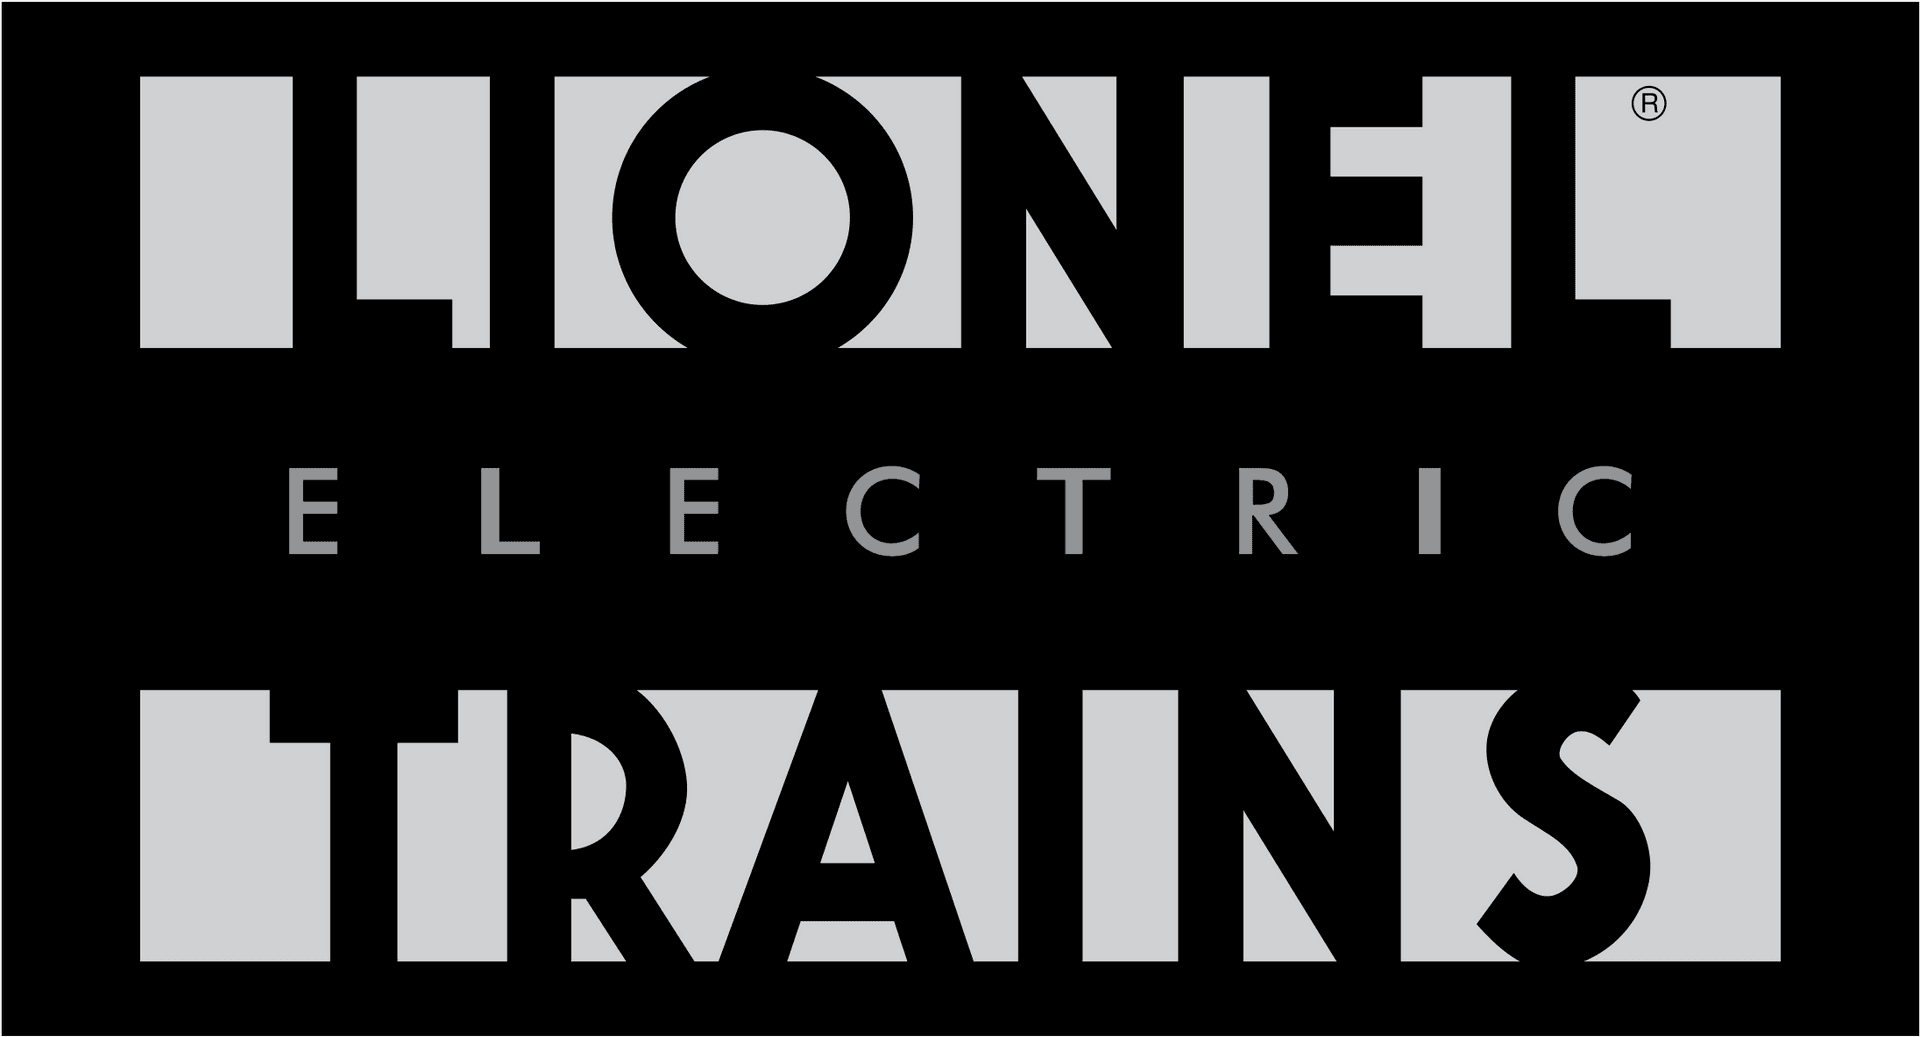 Lionel Electric Trains Logo PNG image